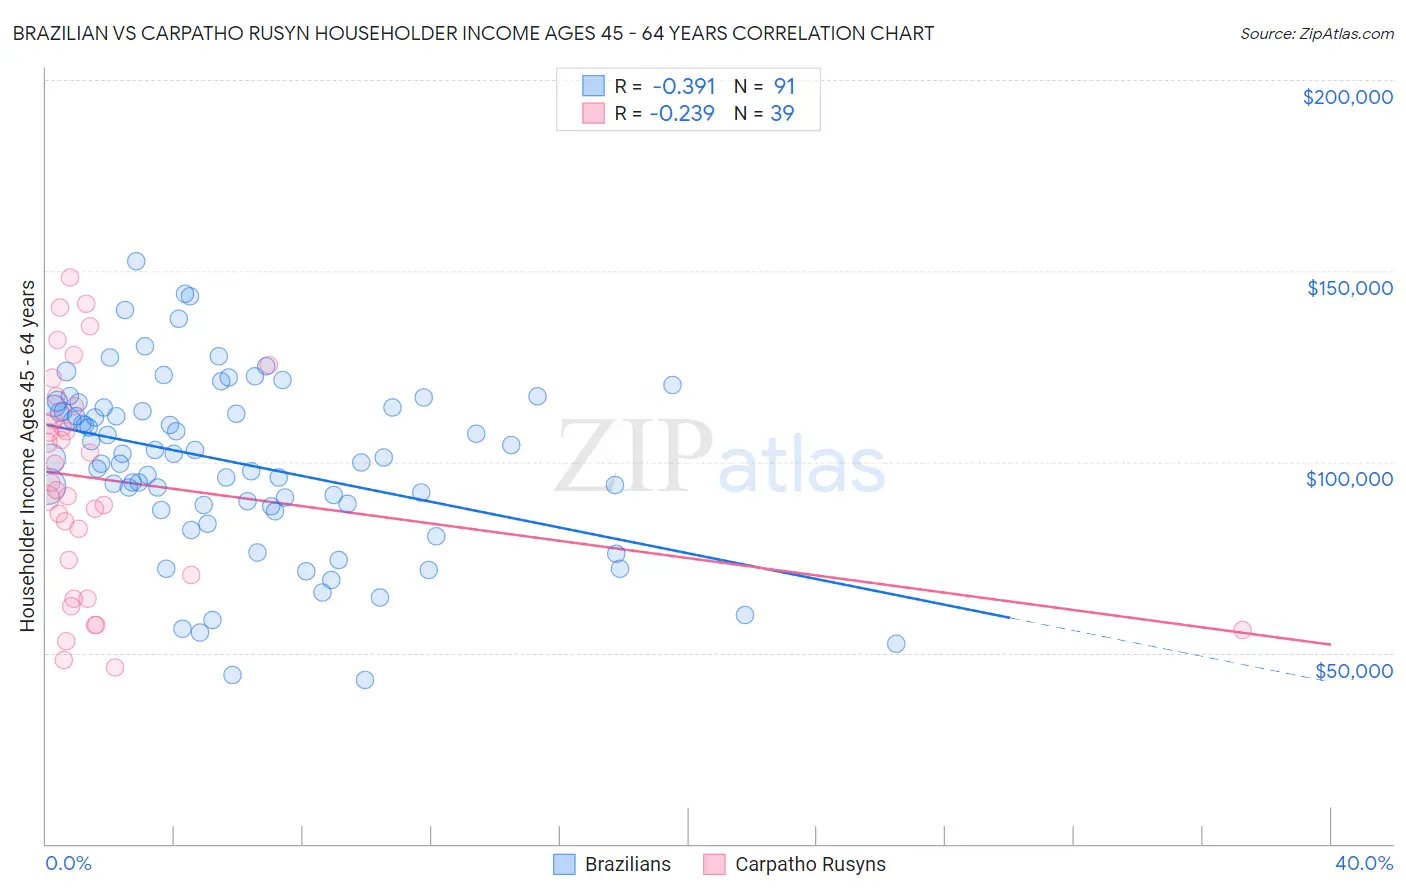 Brazilian vs Carpatho Rusyn Householder Income Ages 45 - 64 years